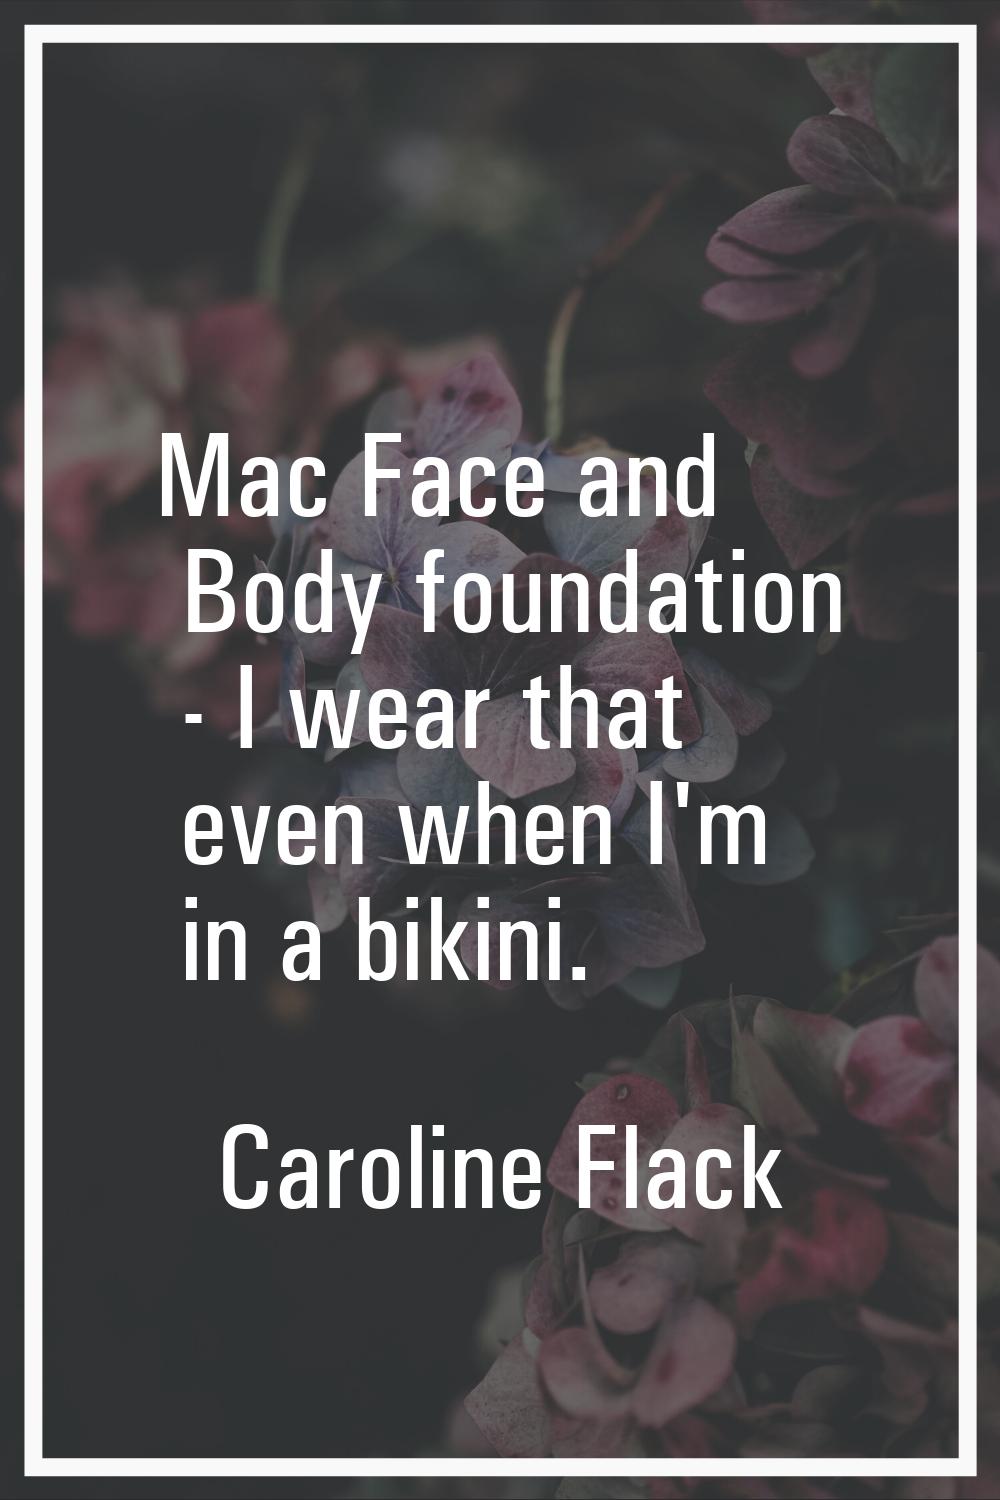 Mac Face and Body foundation - I wear that even when I'm in a bikini.